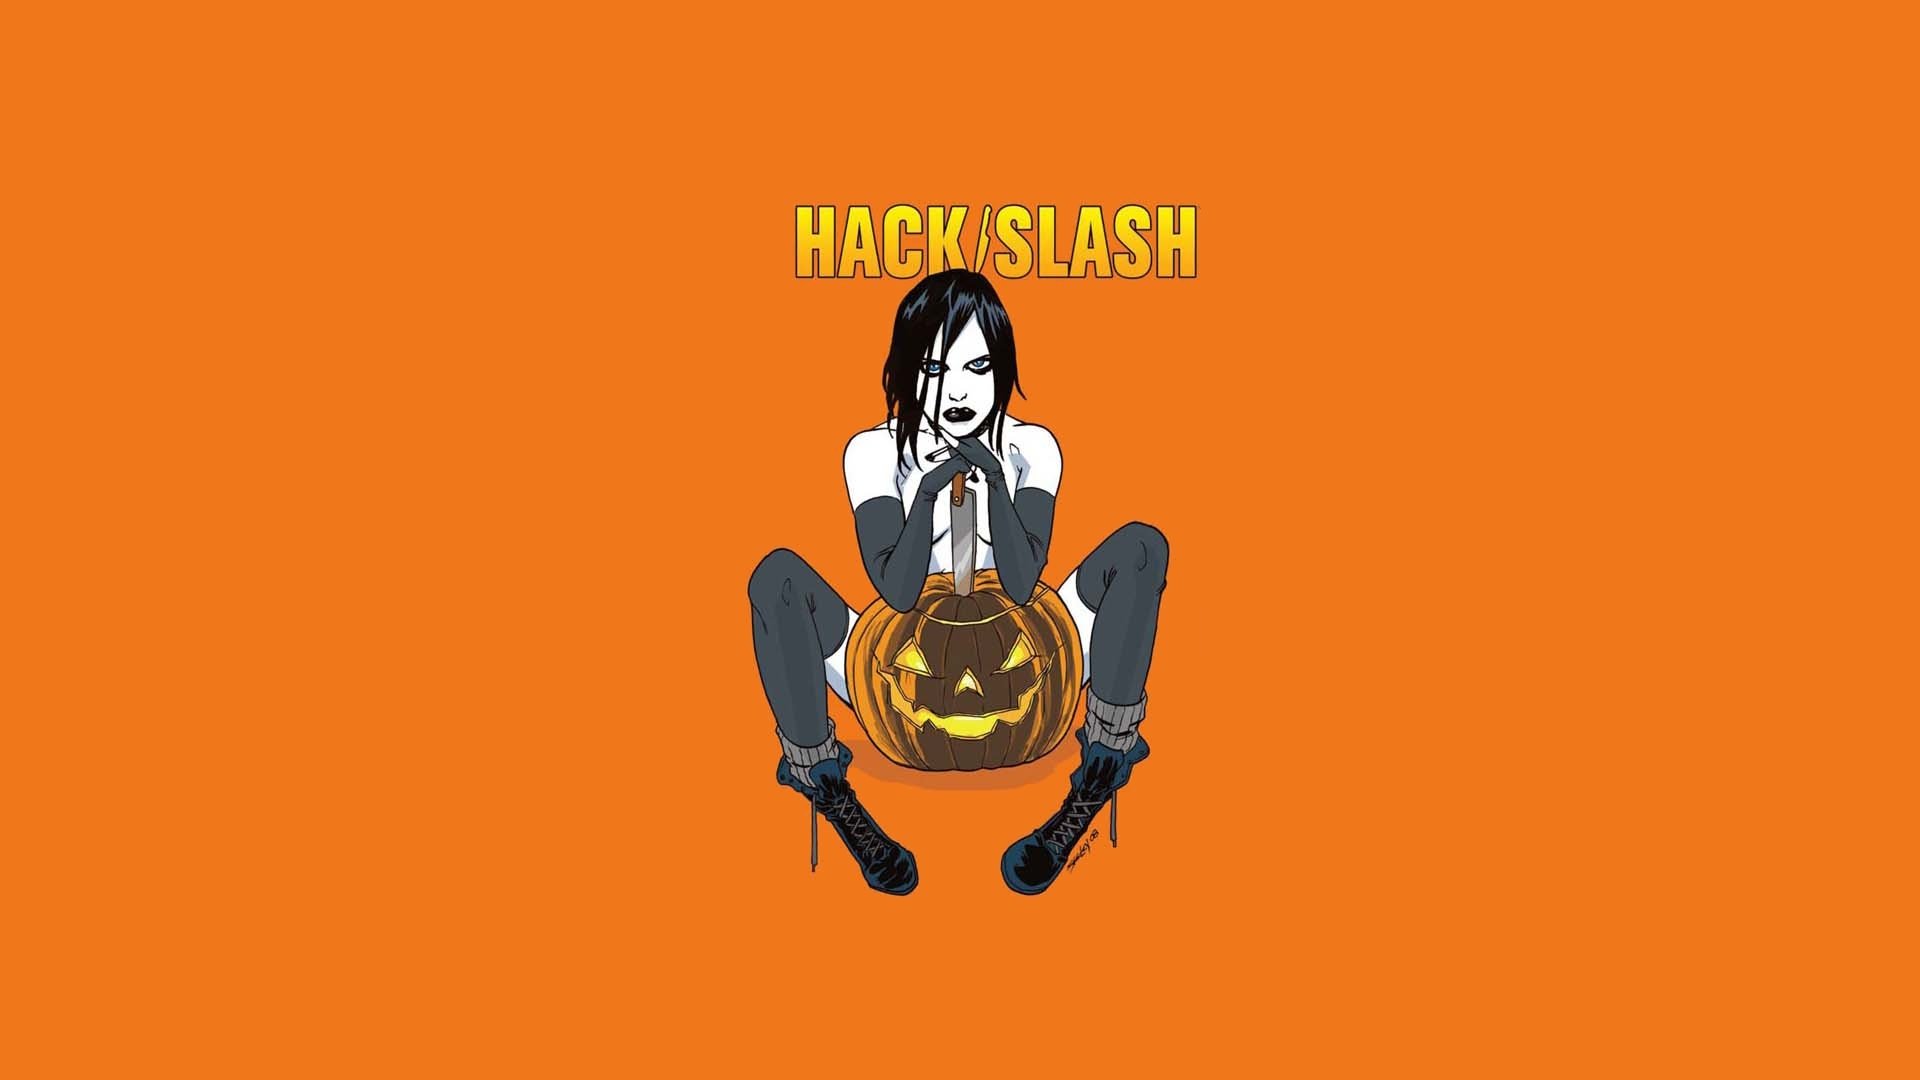 Free download Hack/Slash wallpaper ID:326359 1080p for PC